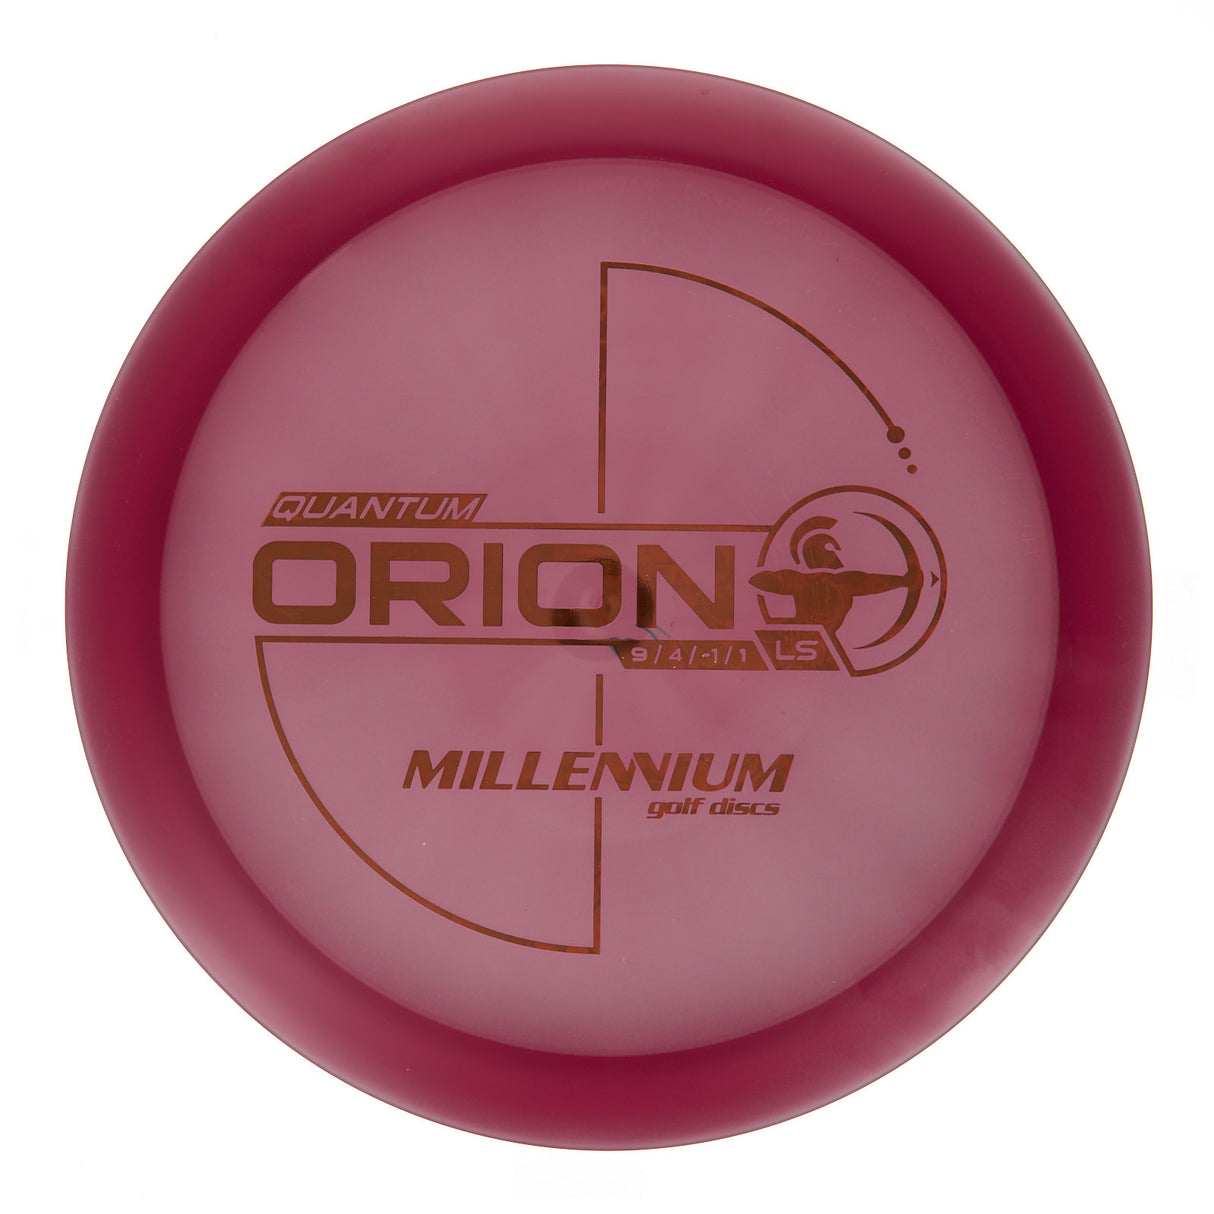 Millennium Orion LS - Quantum  169g | Style 0003